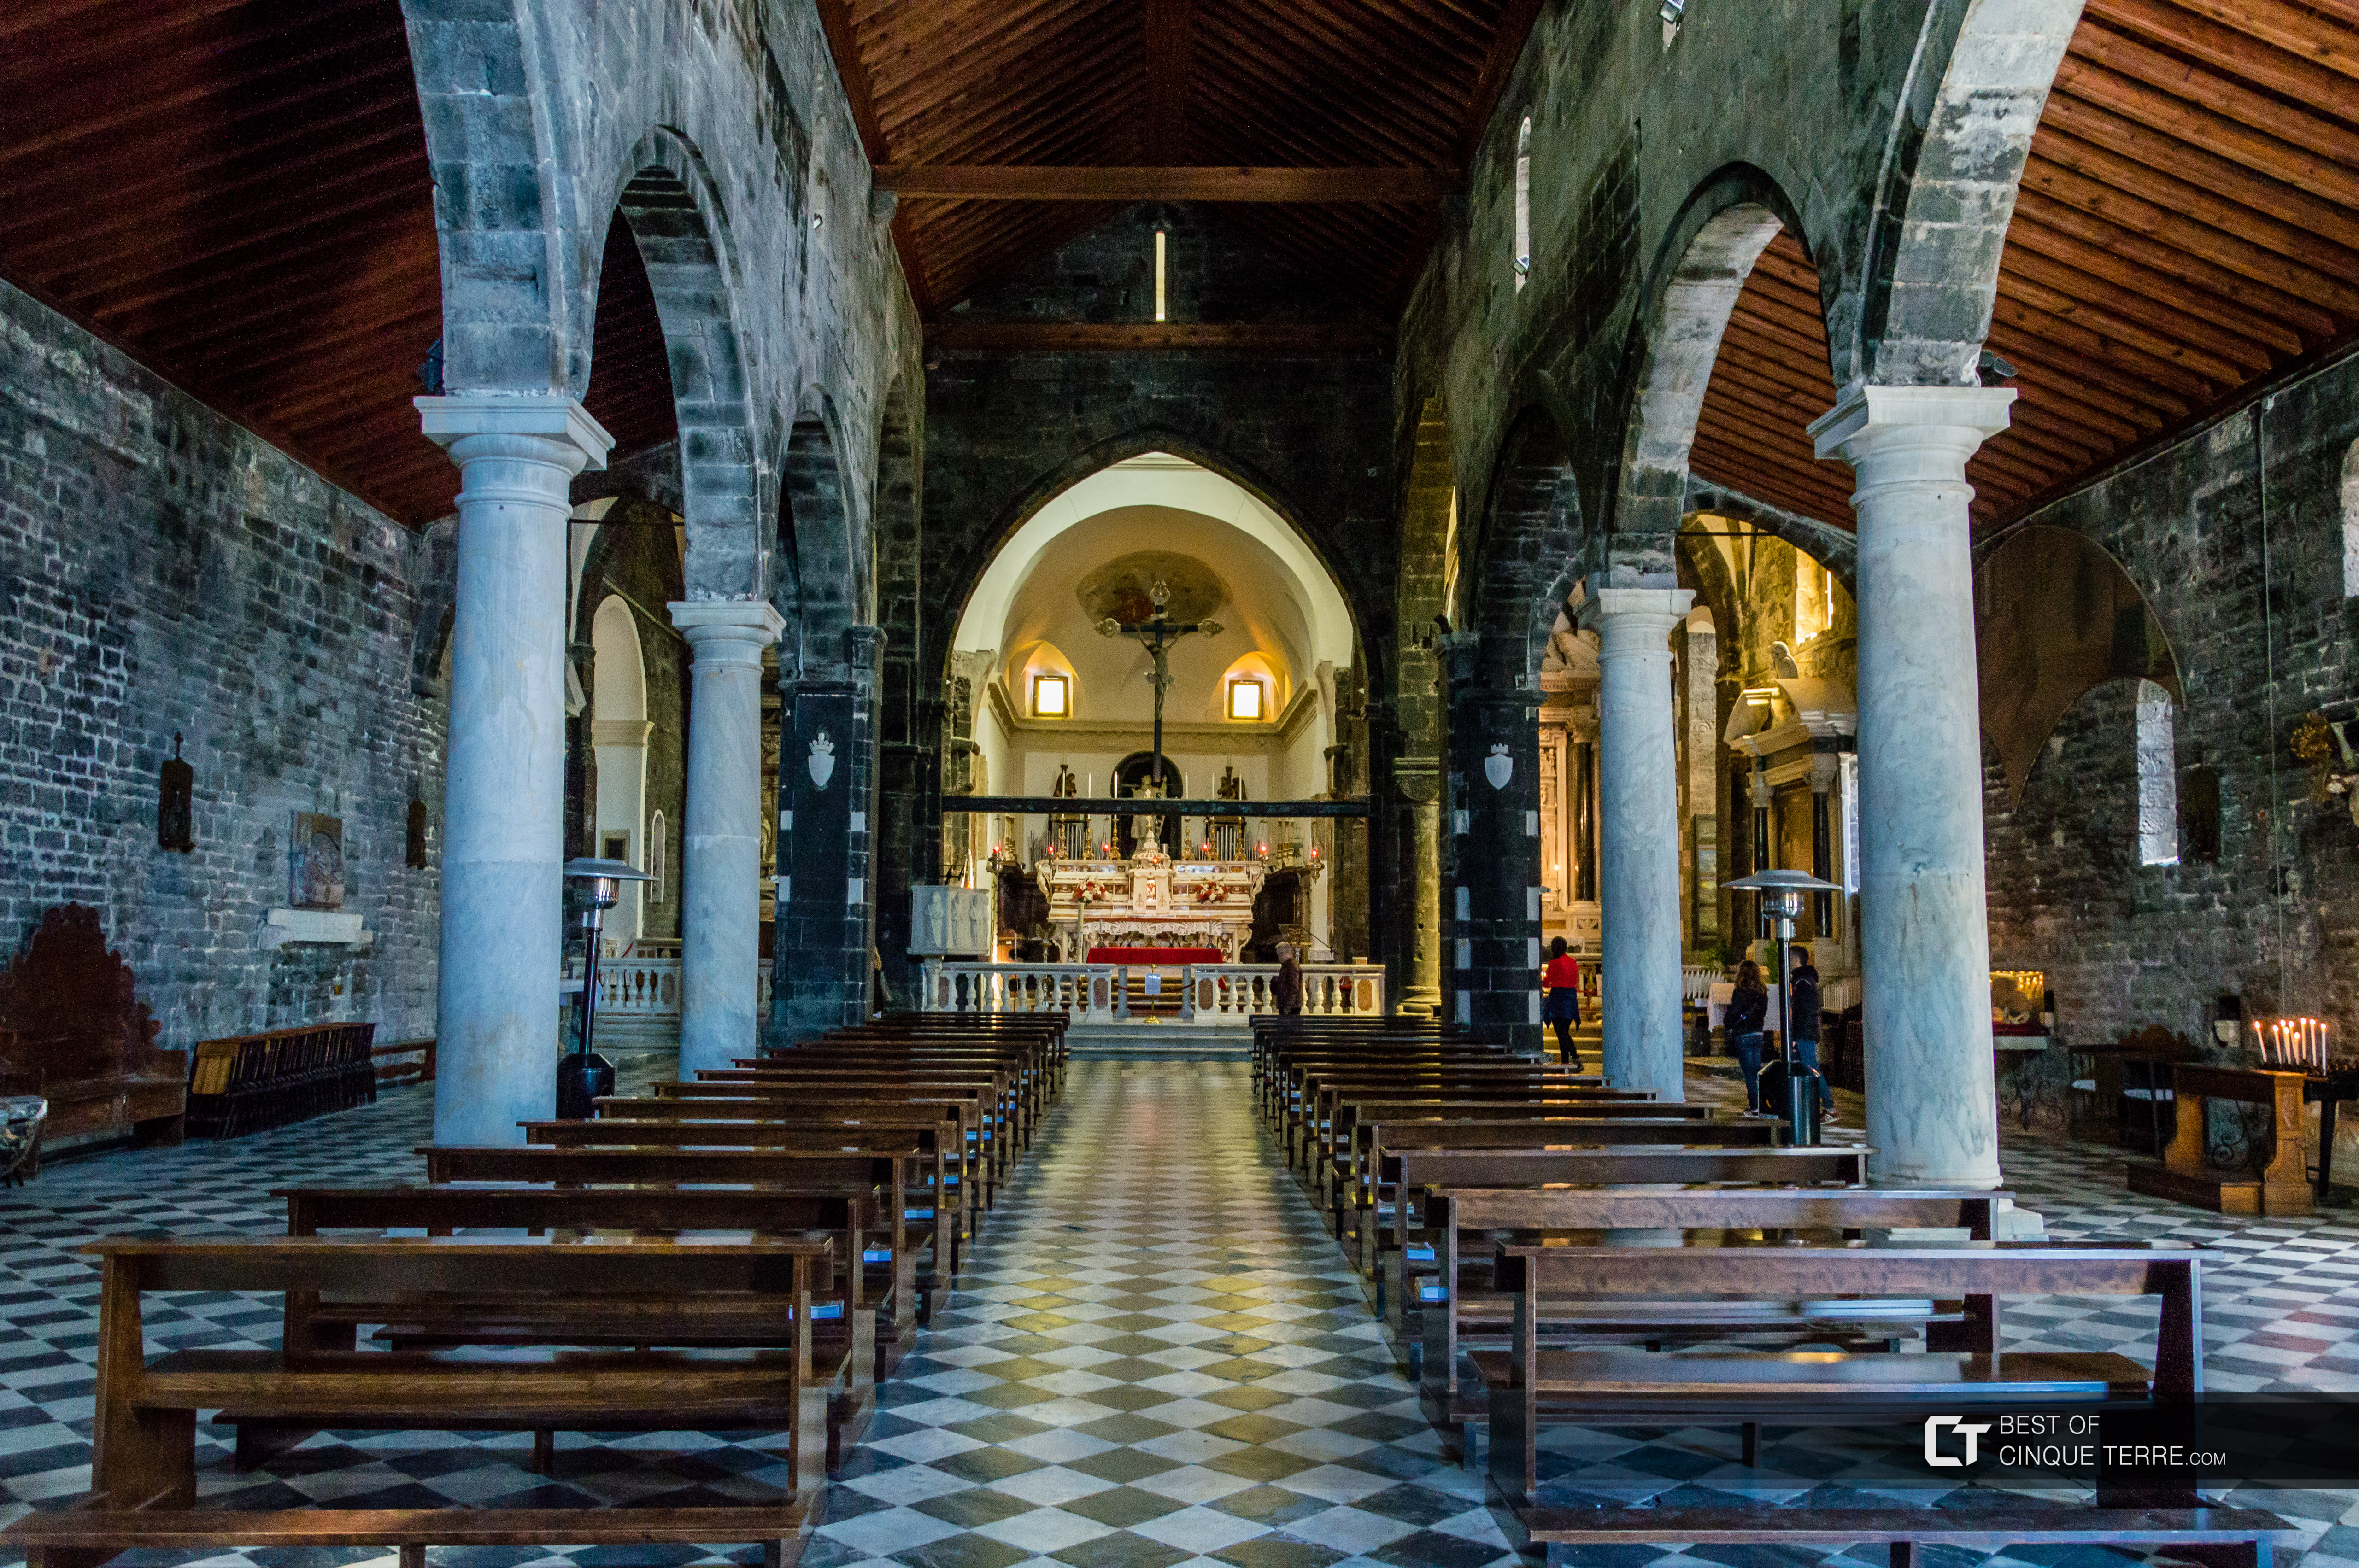 Portovenere. Inside the church of Saint Peter